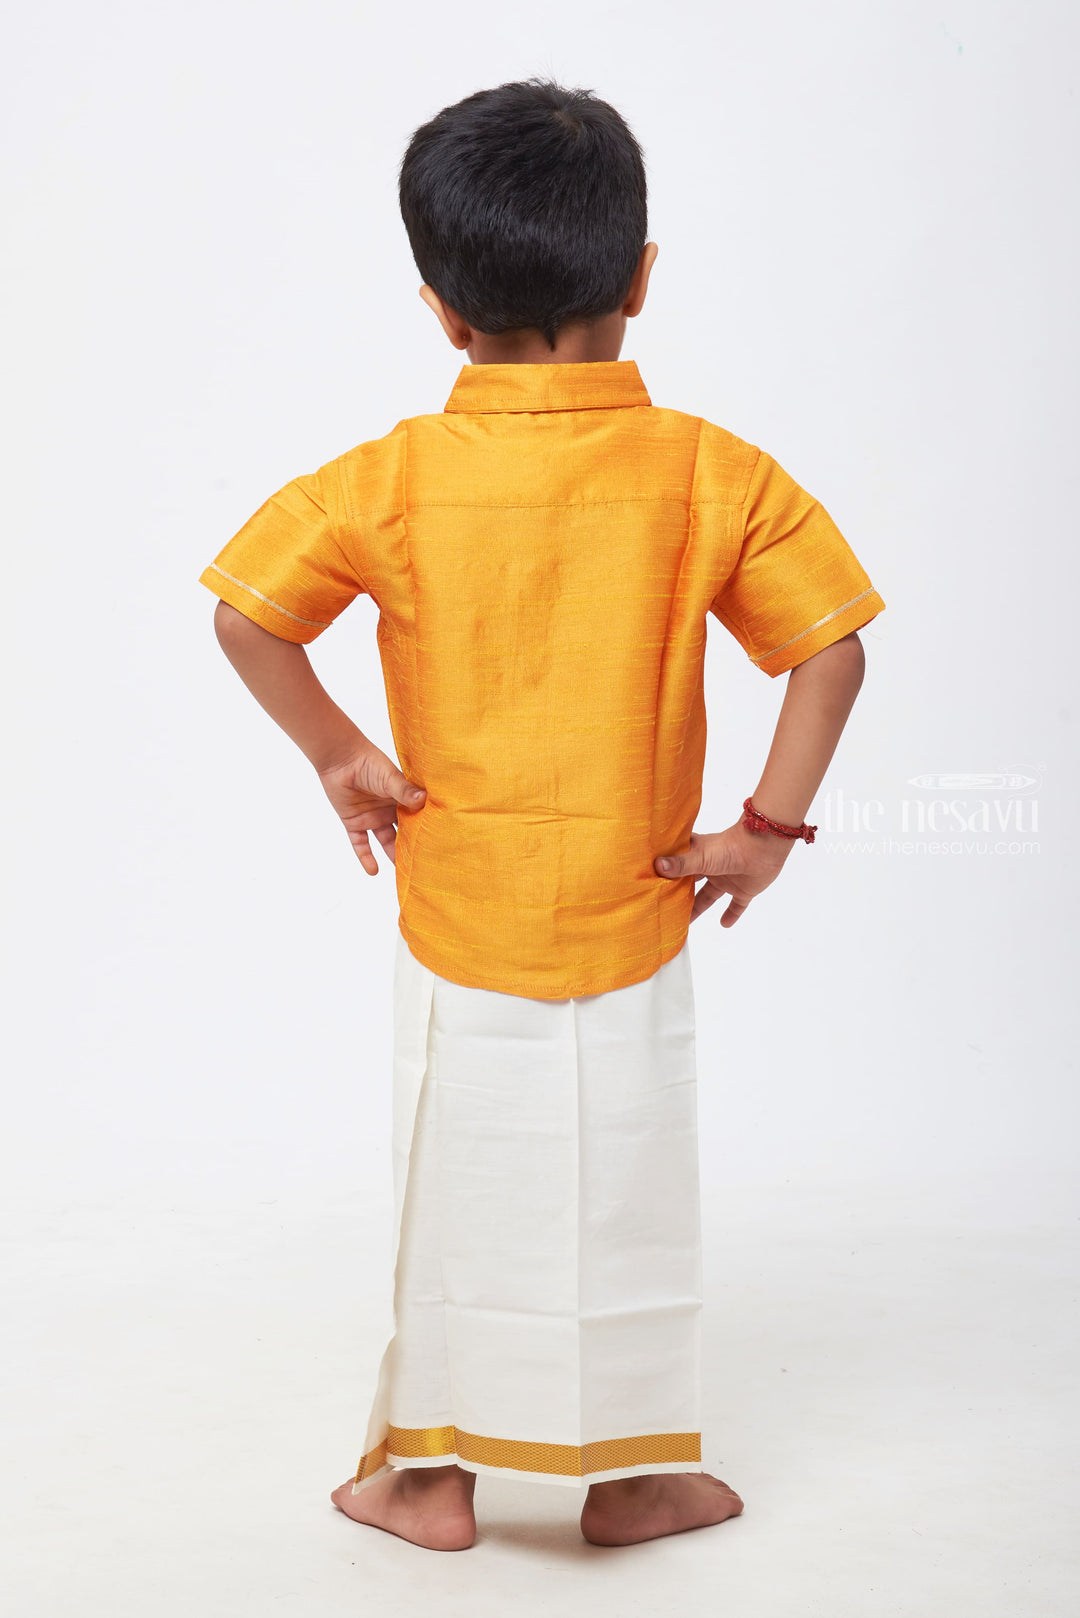 The Nesavu Boys Silk Shirt Premium Boys Yellow Silk Shirt with Silver Detailing: Perfect for Festive Seasons and Special Occasions Nesavu Premium Quality Boys Shirts | Durable and Stylish | The Nesavu